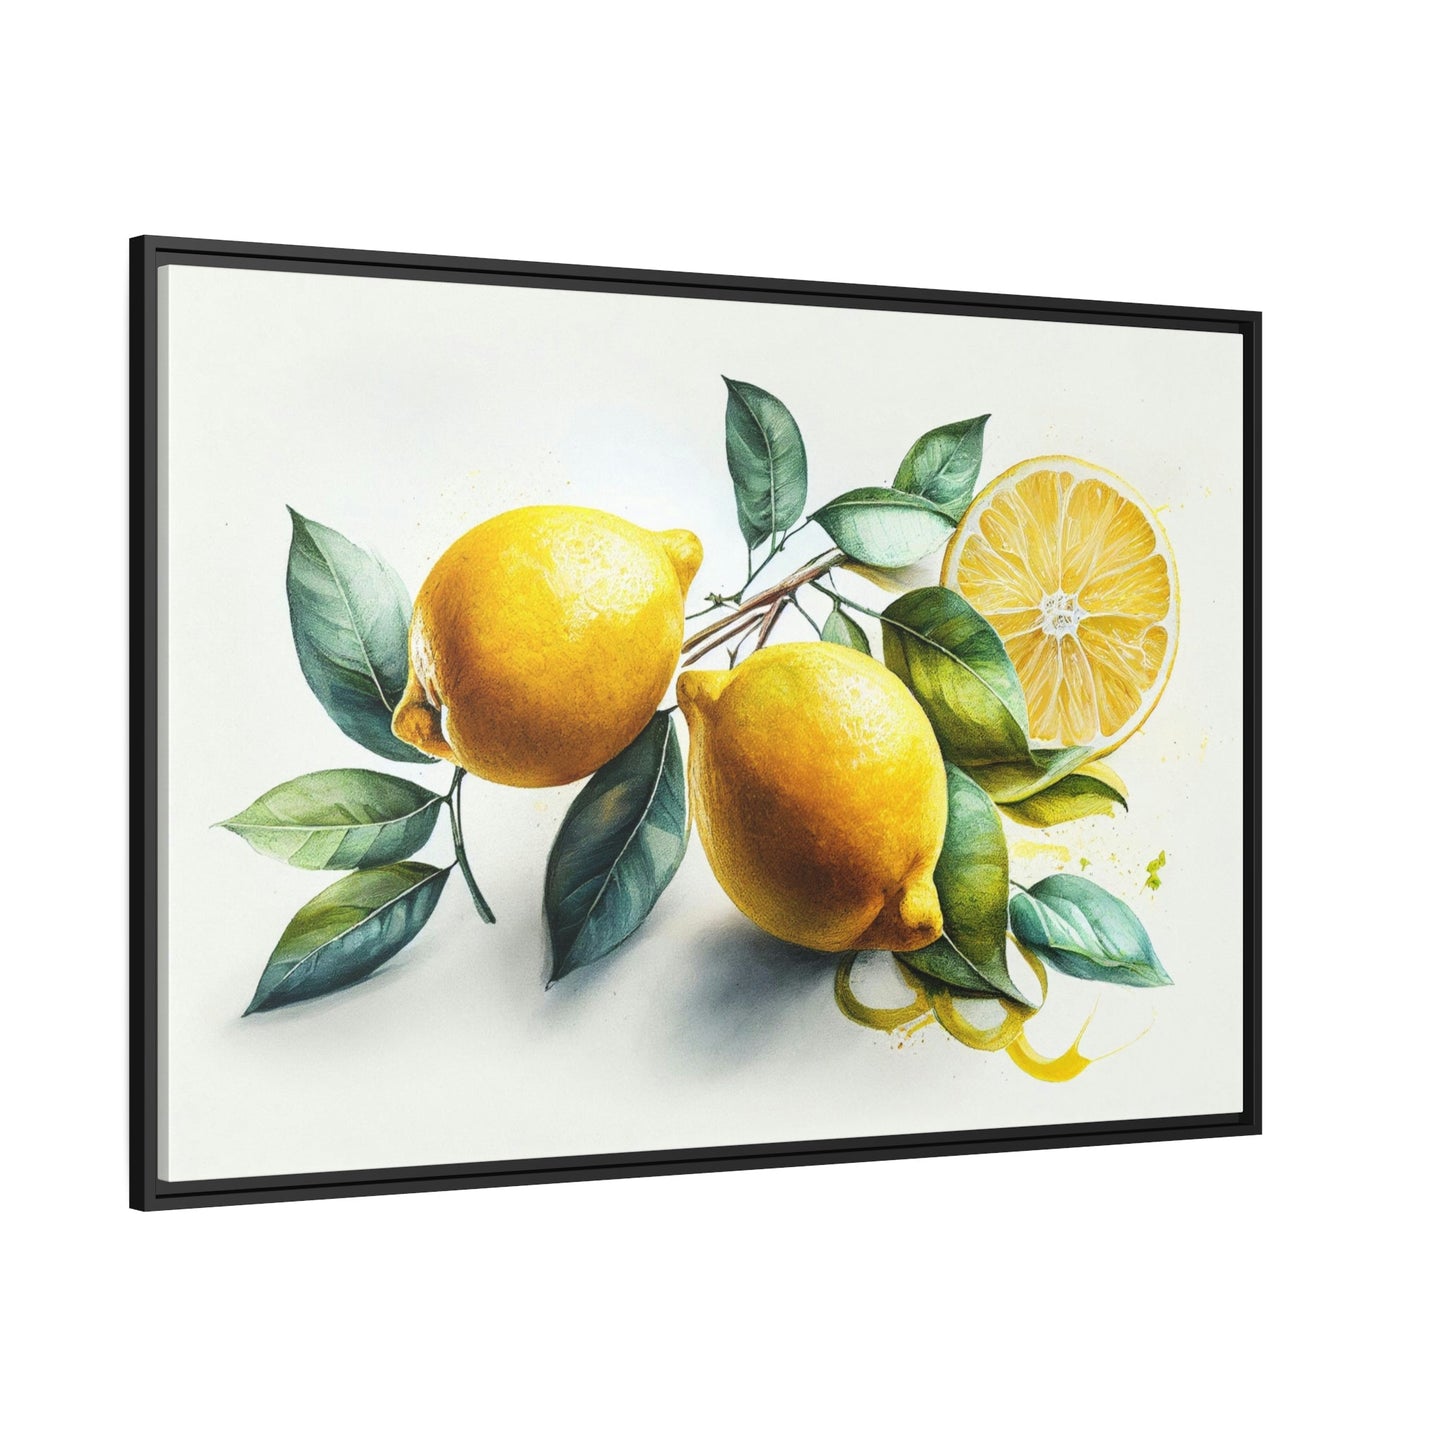 Lemon Burst: Bright and Playful Wall Art Prints of Yellow Lemons on Natural Canvas